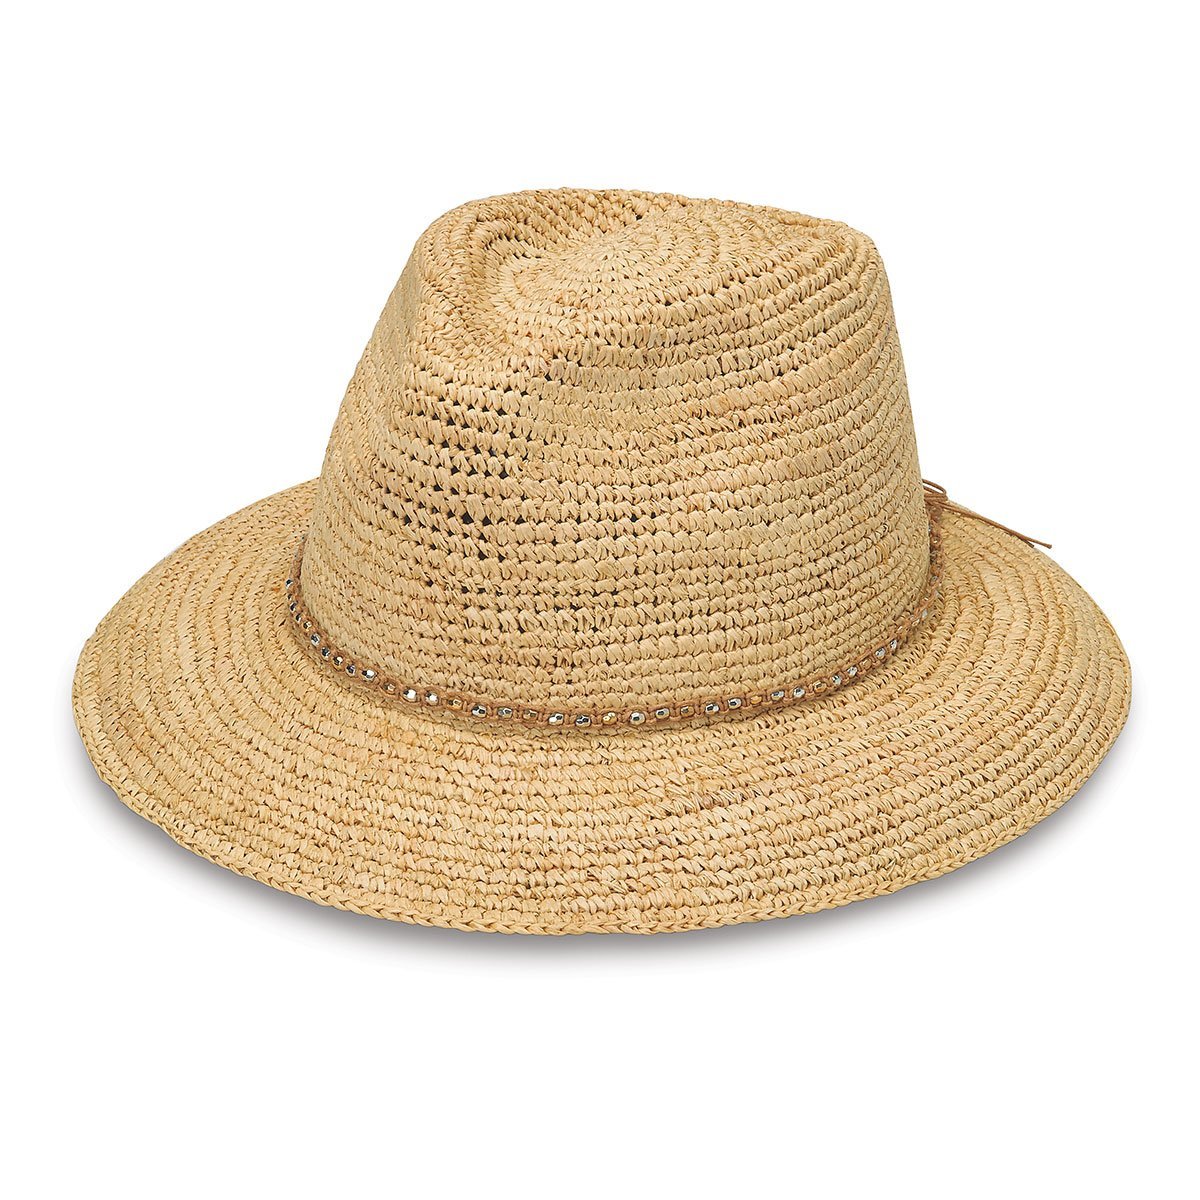 Featuring Front of Women's Wide Brim Fedora Style Malibu Straw Summer Sun Hat from Wallaroo